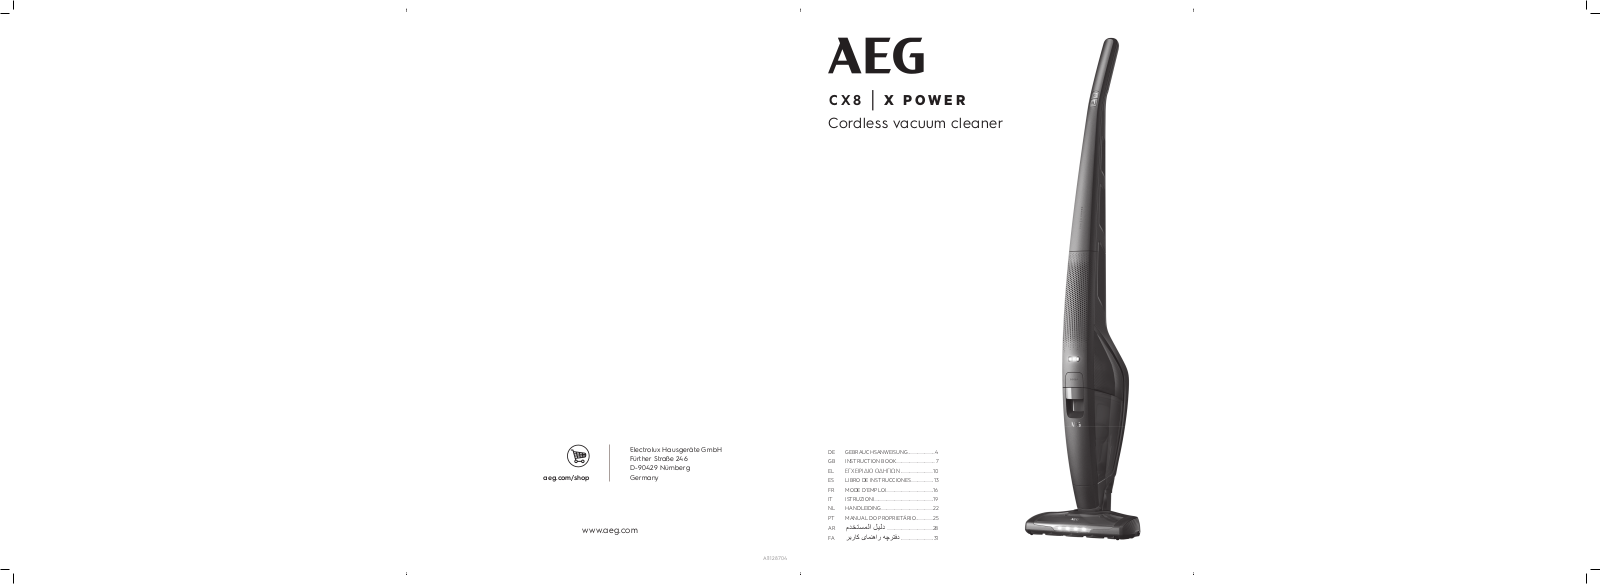 AEG CX8 User Guide